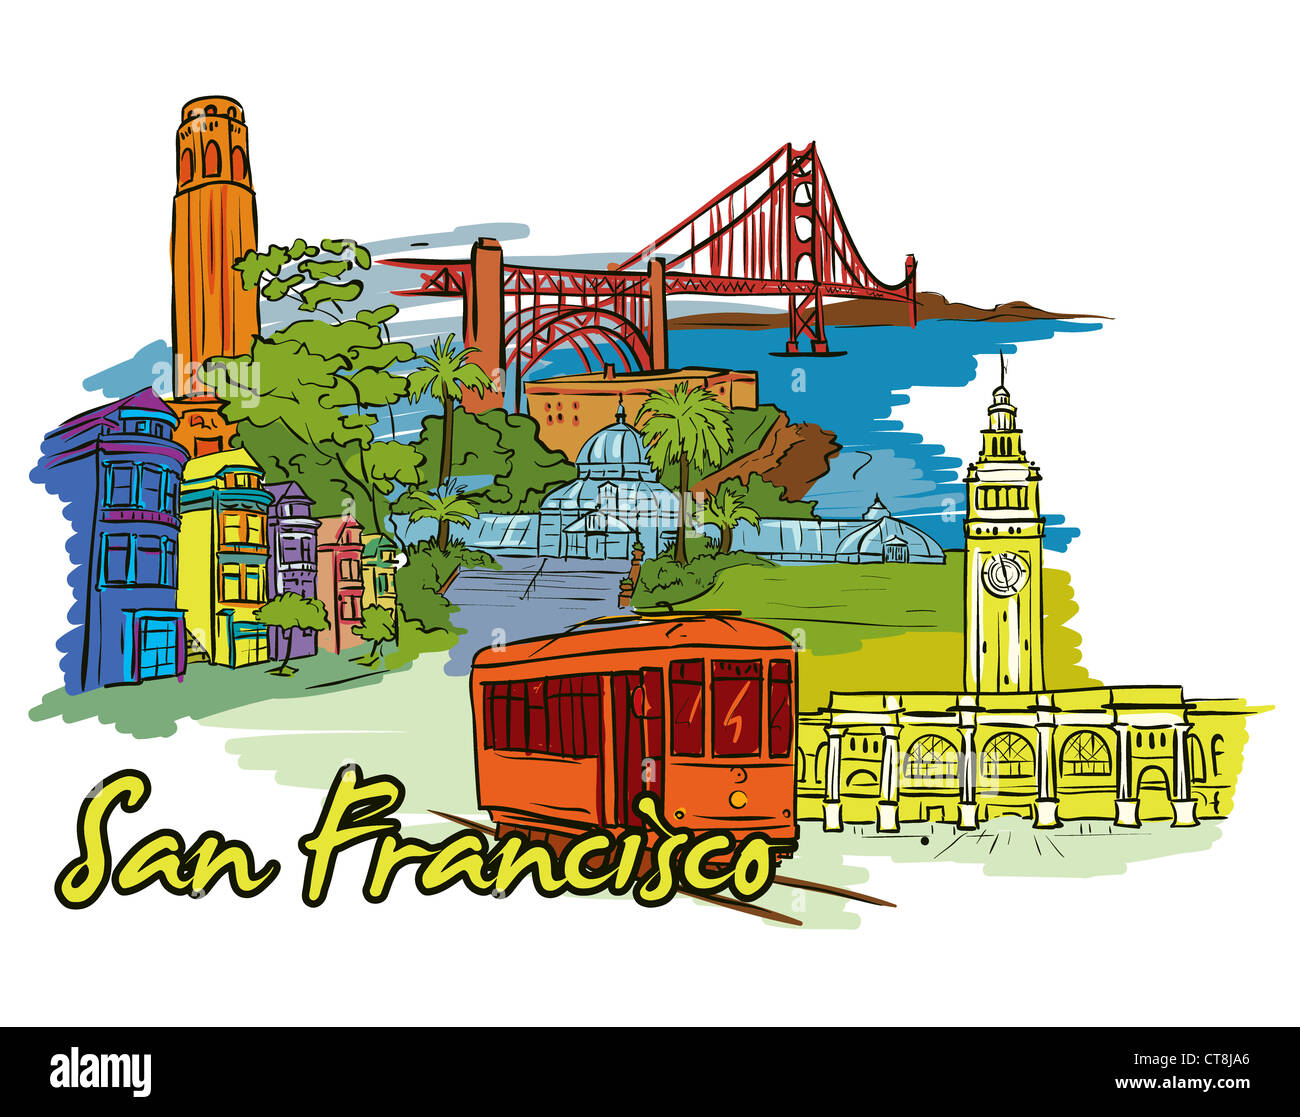 San Francisco doodles vector illustration Banque D'Images